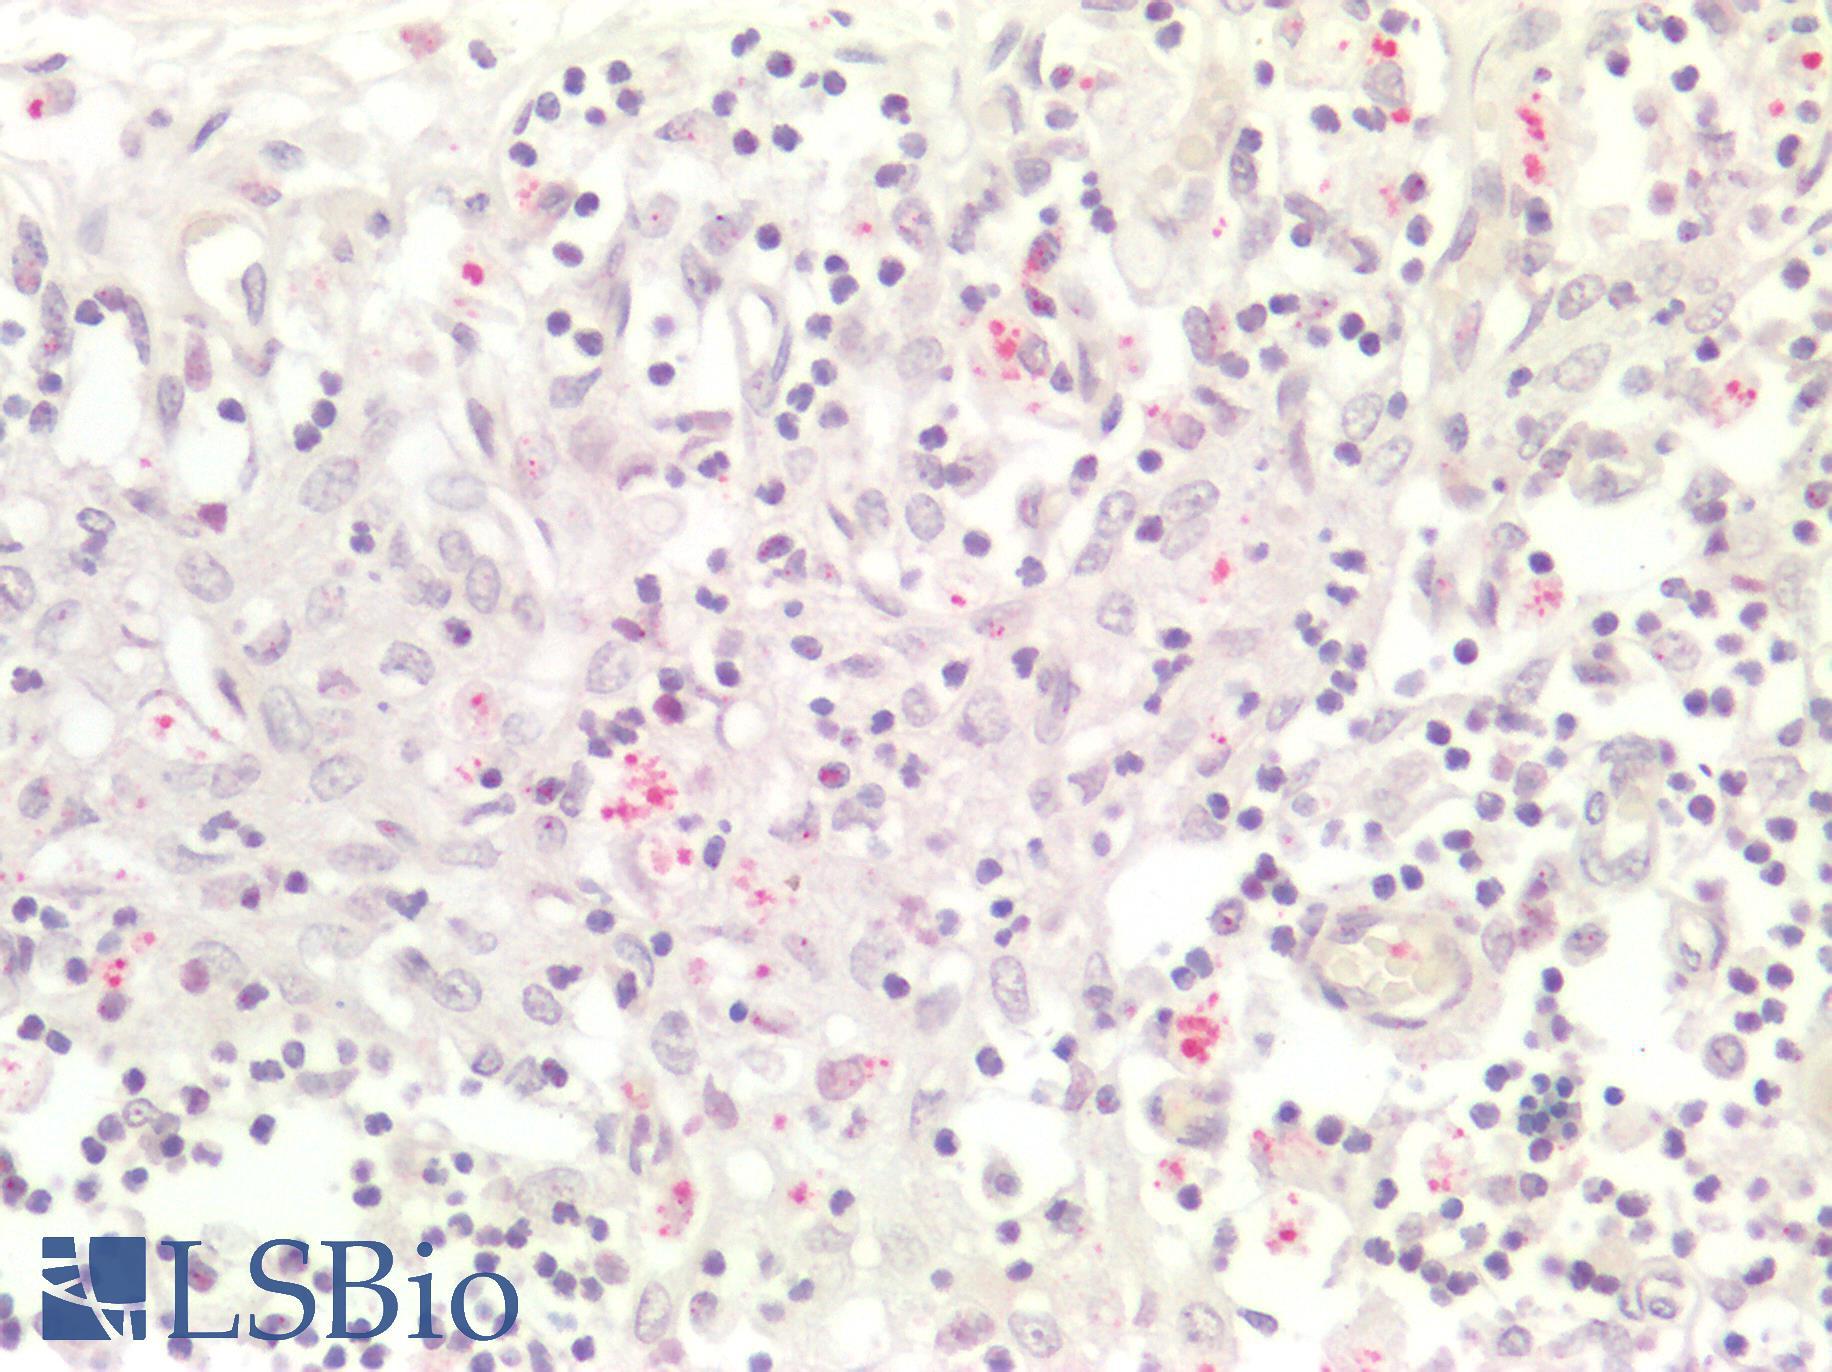 RB1 / Retinoblastoma / RB Antibody - Human Spleen: Formalin-Fixed, Paraffin-Embedded (FFPE)